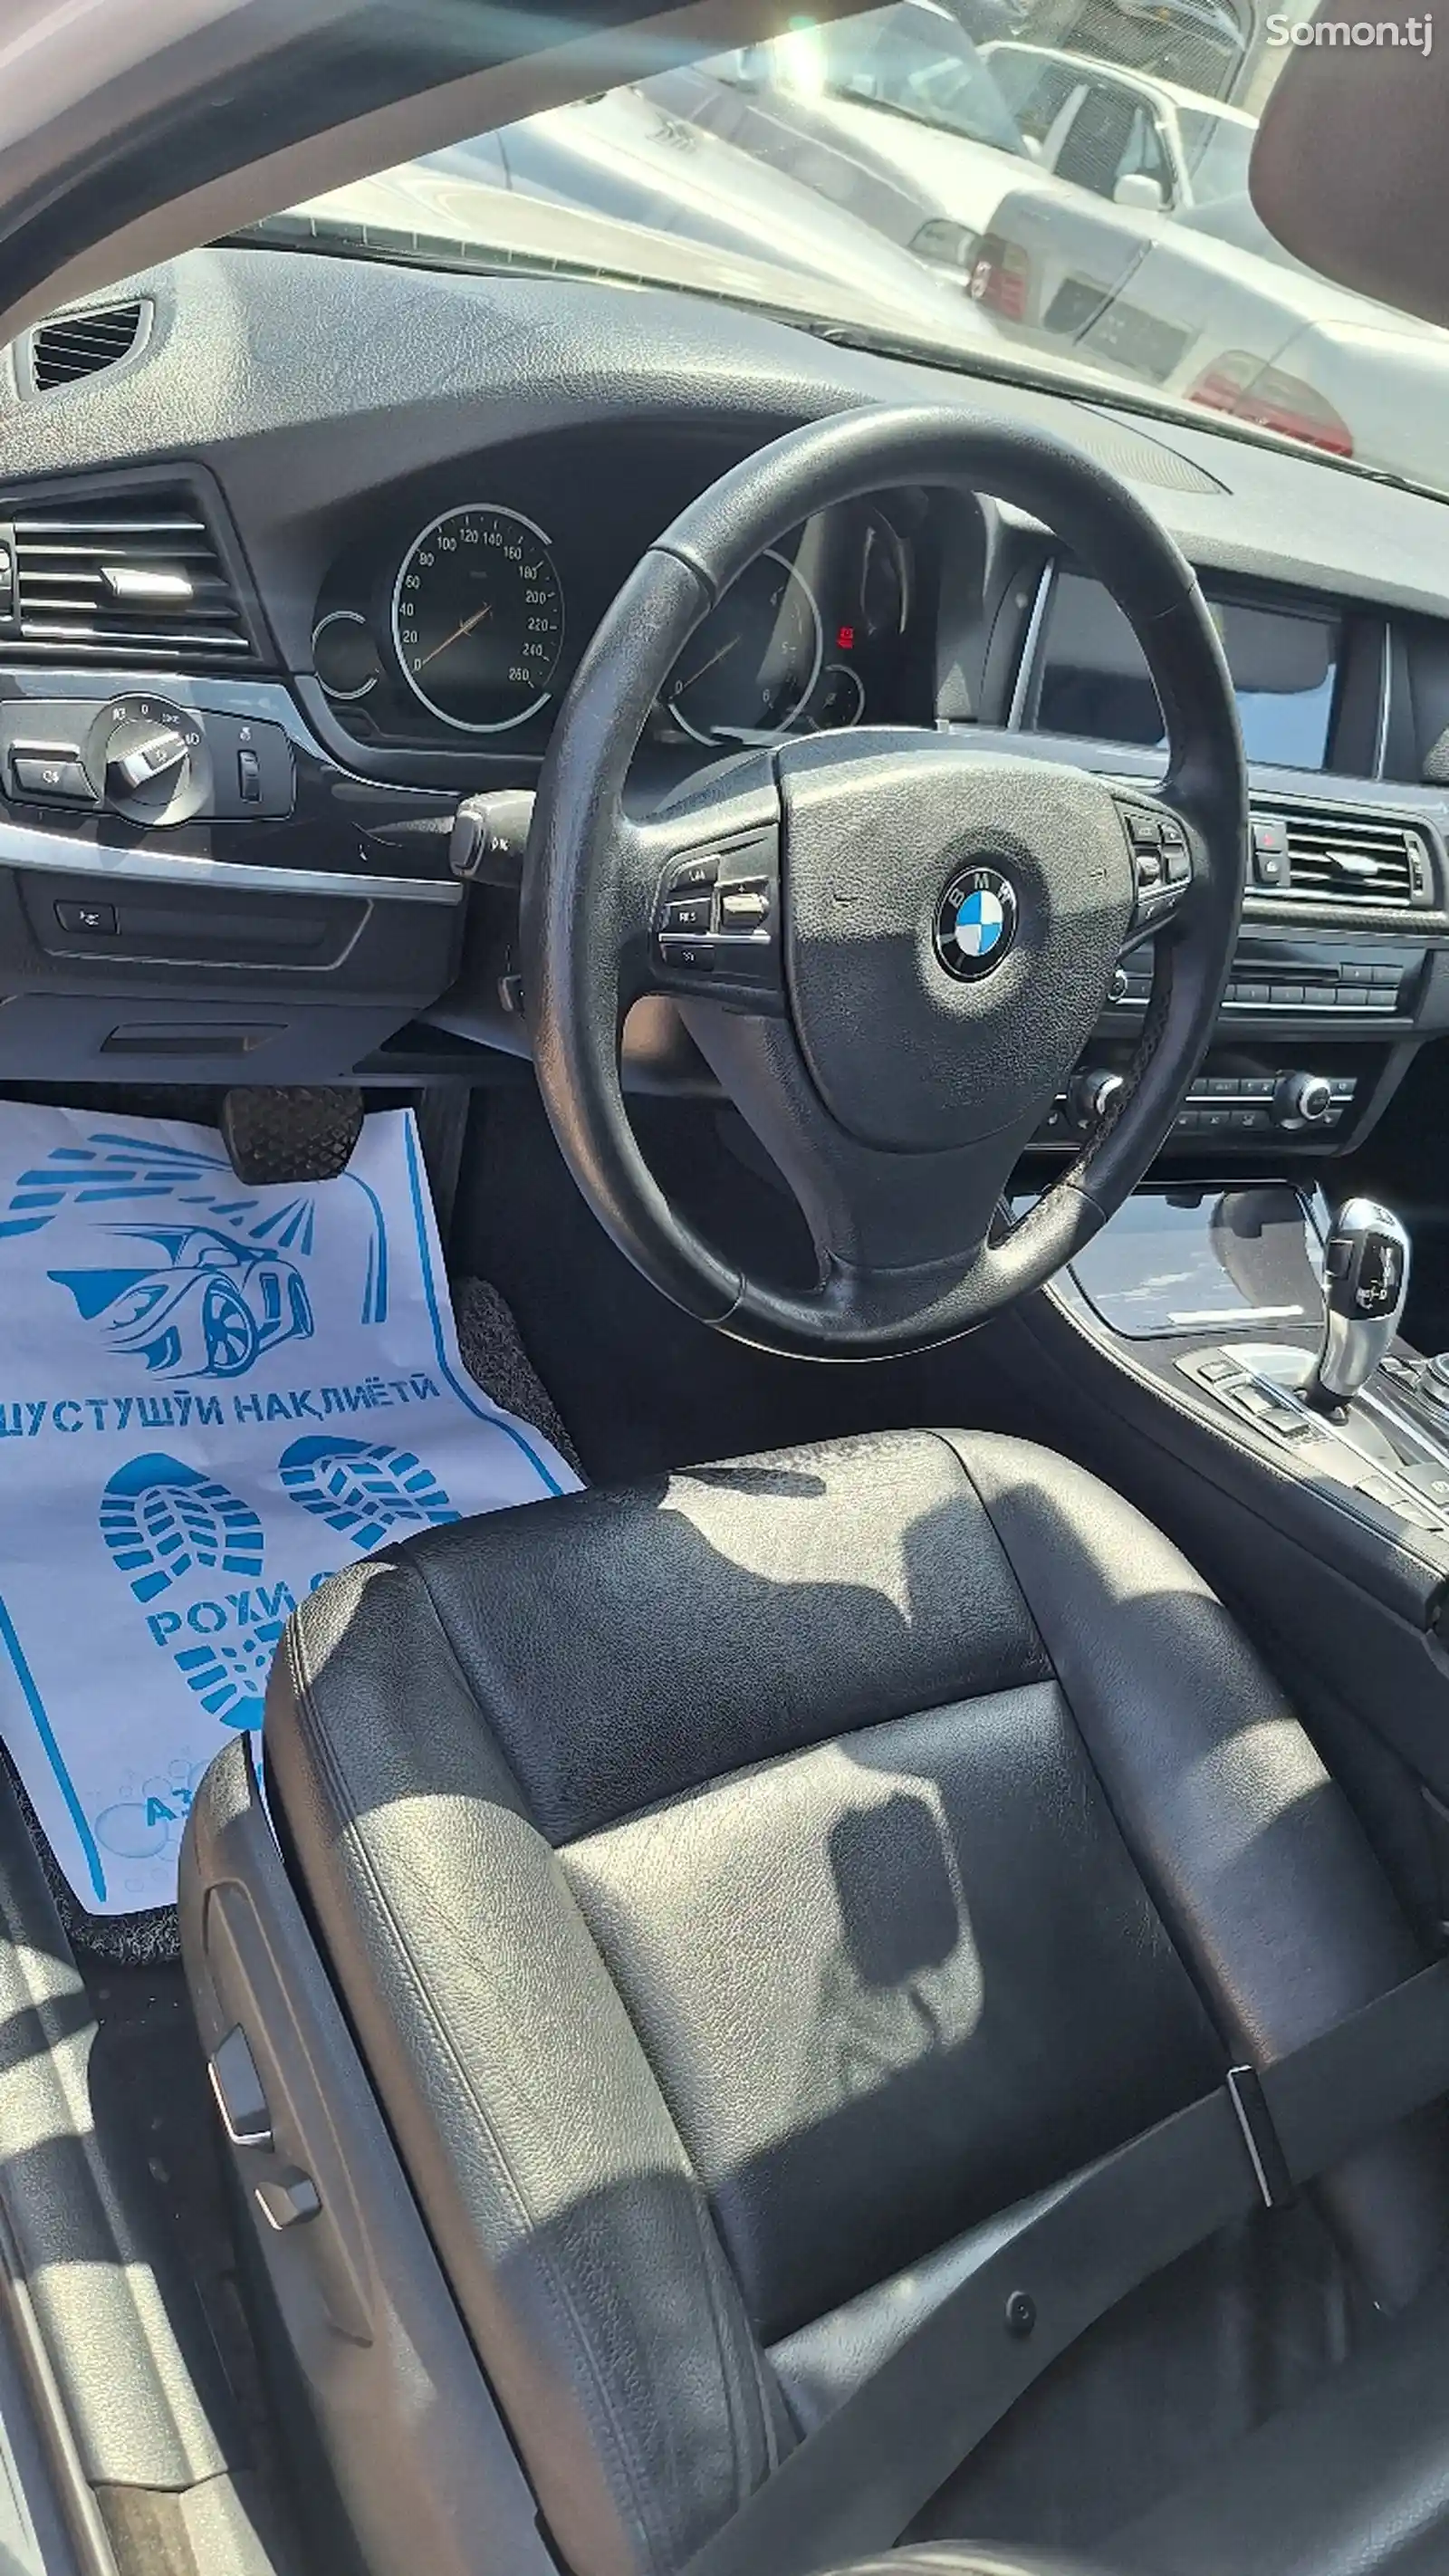 BMW 7 series, 2014-10